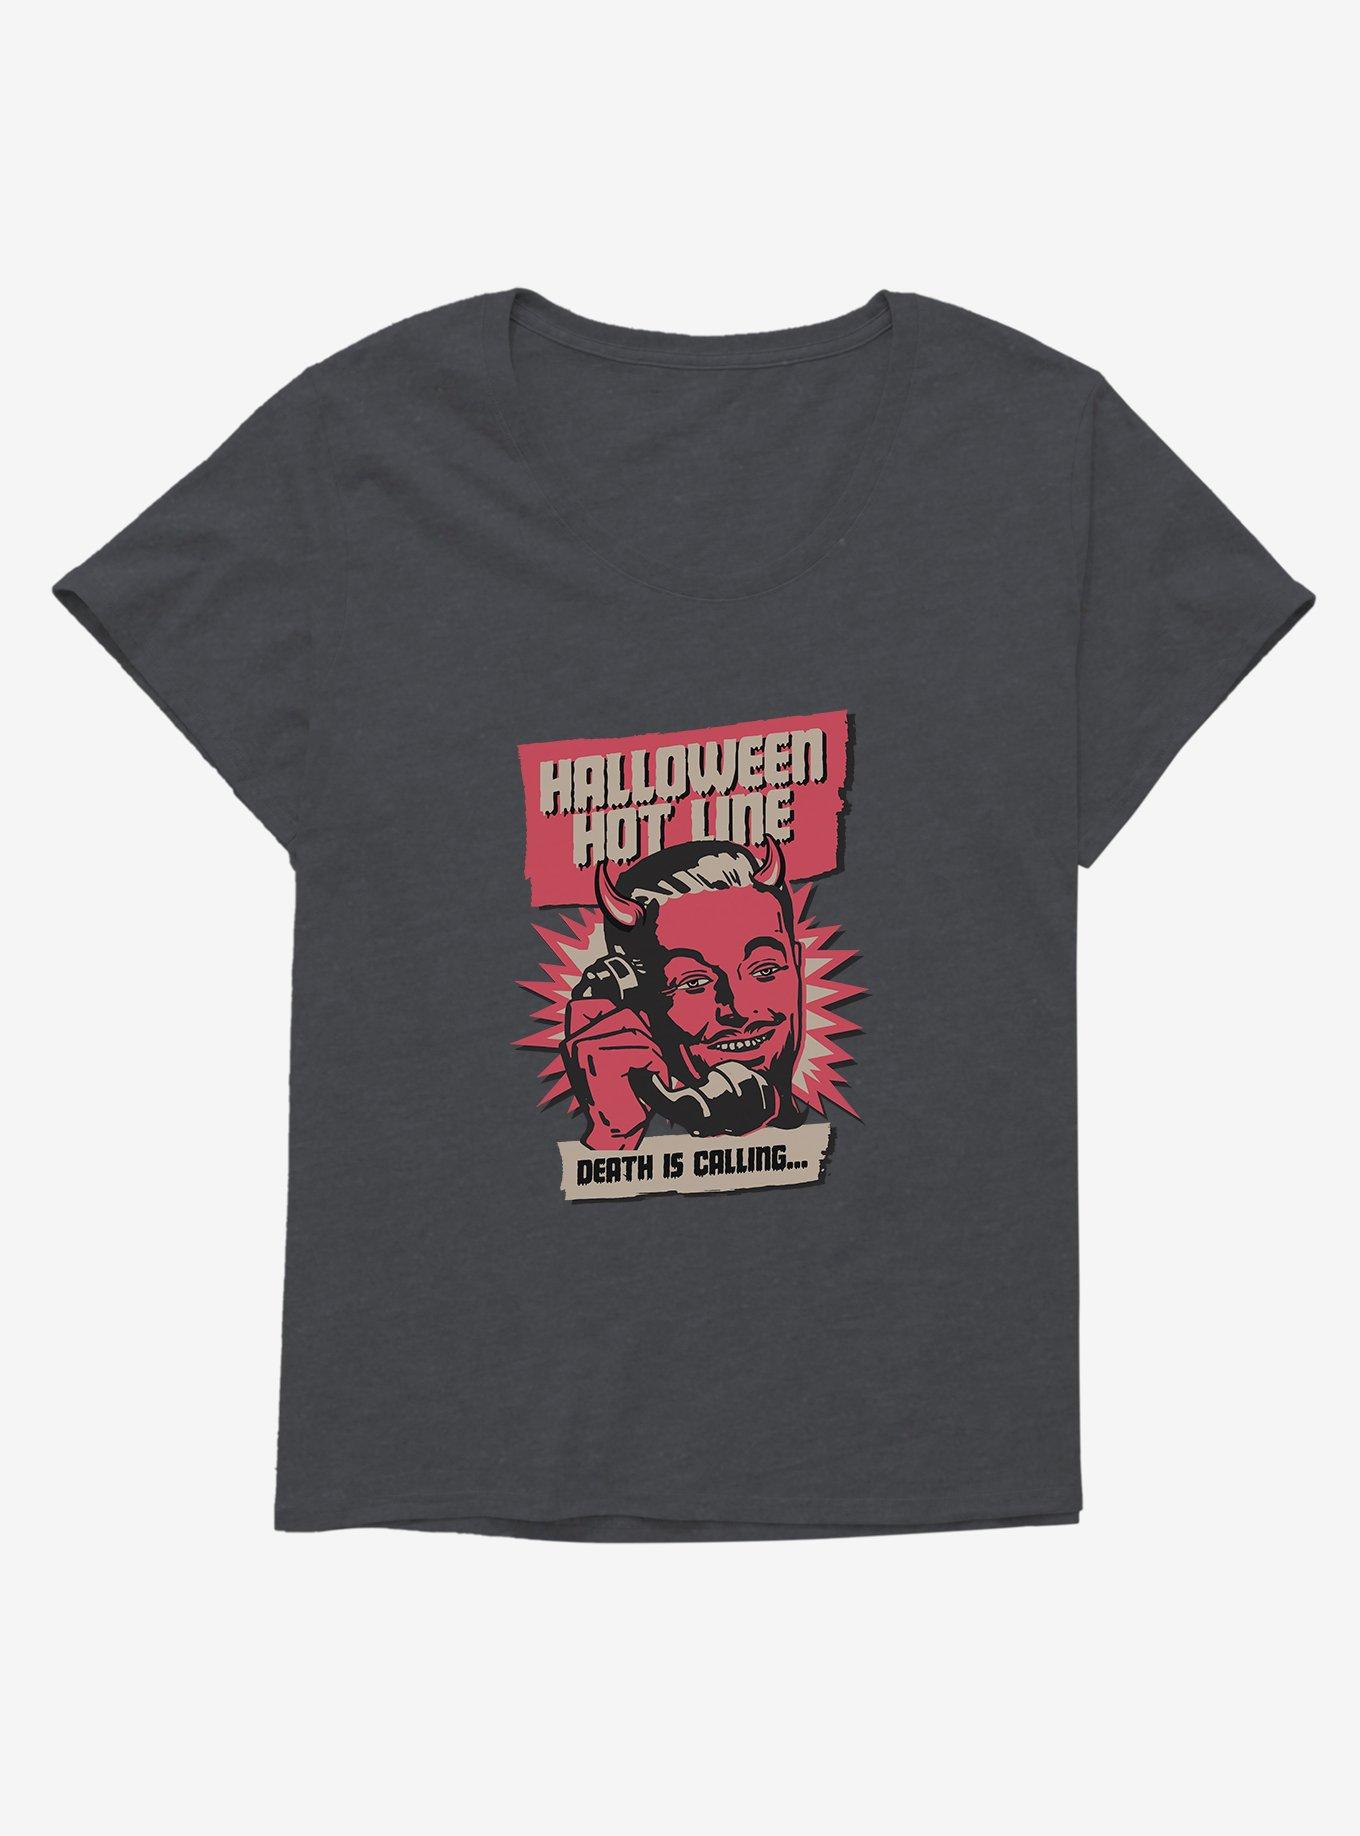 Halloween Halloween Hot Line Girls Plus Size T-Shirt, CHARCOAL HEATHER, hi-res